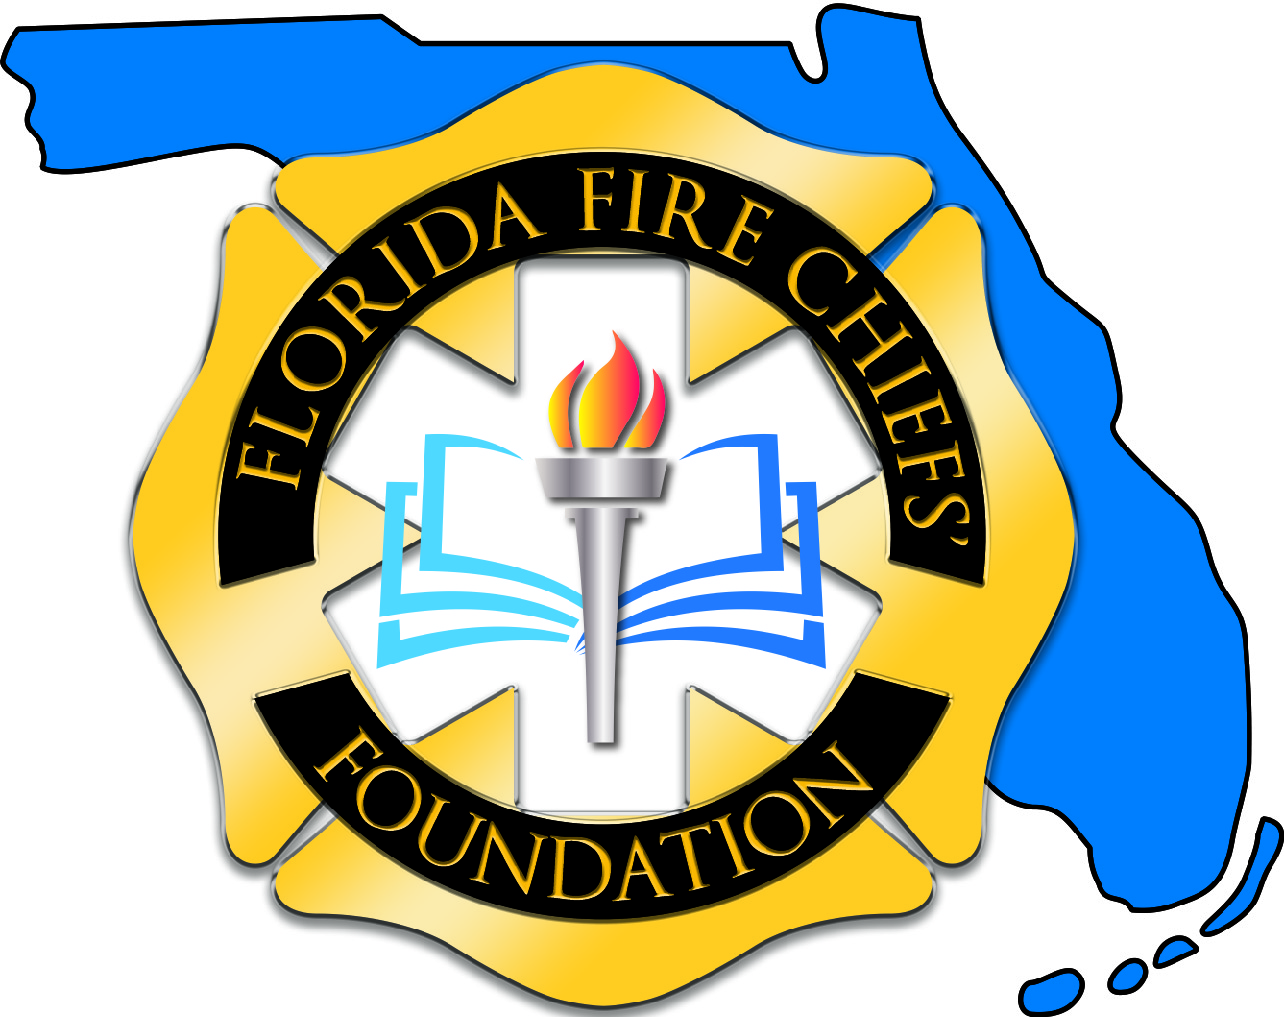 Florida Fire Chiefs' Foundation (FFCF)